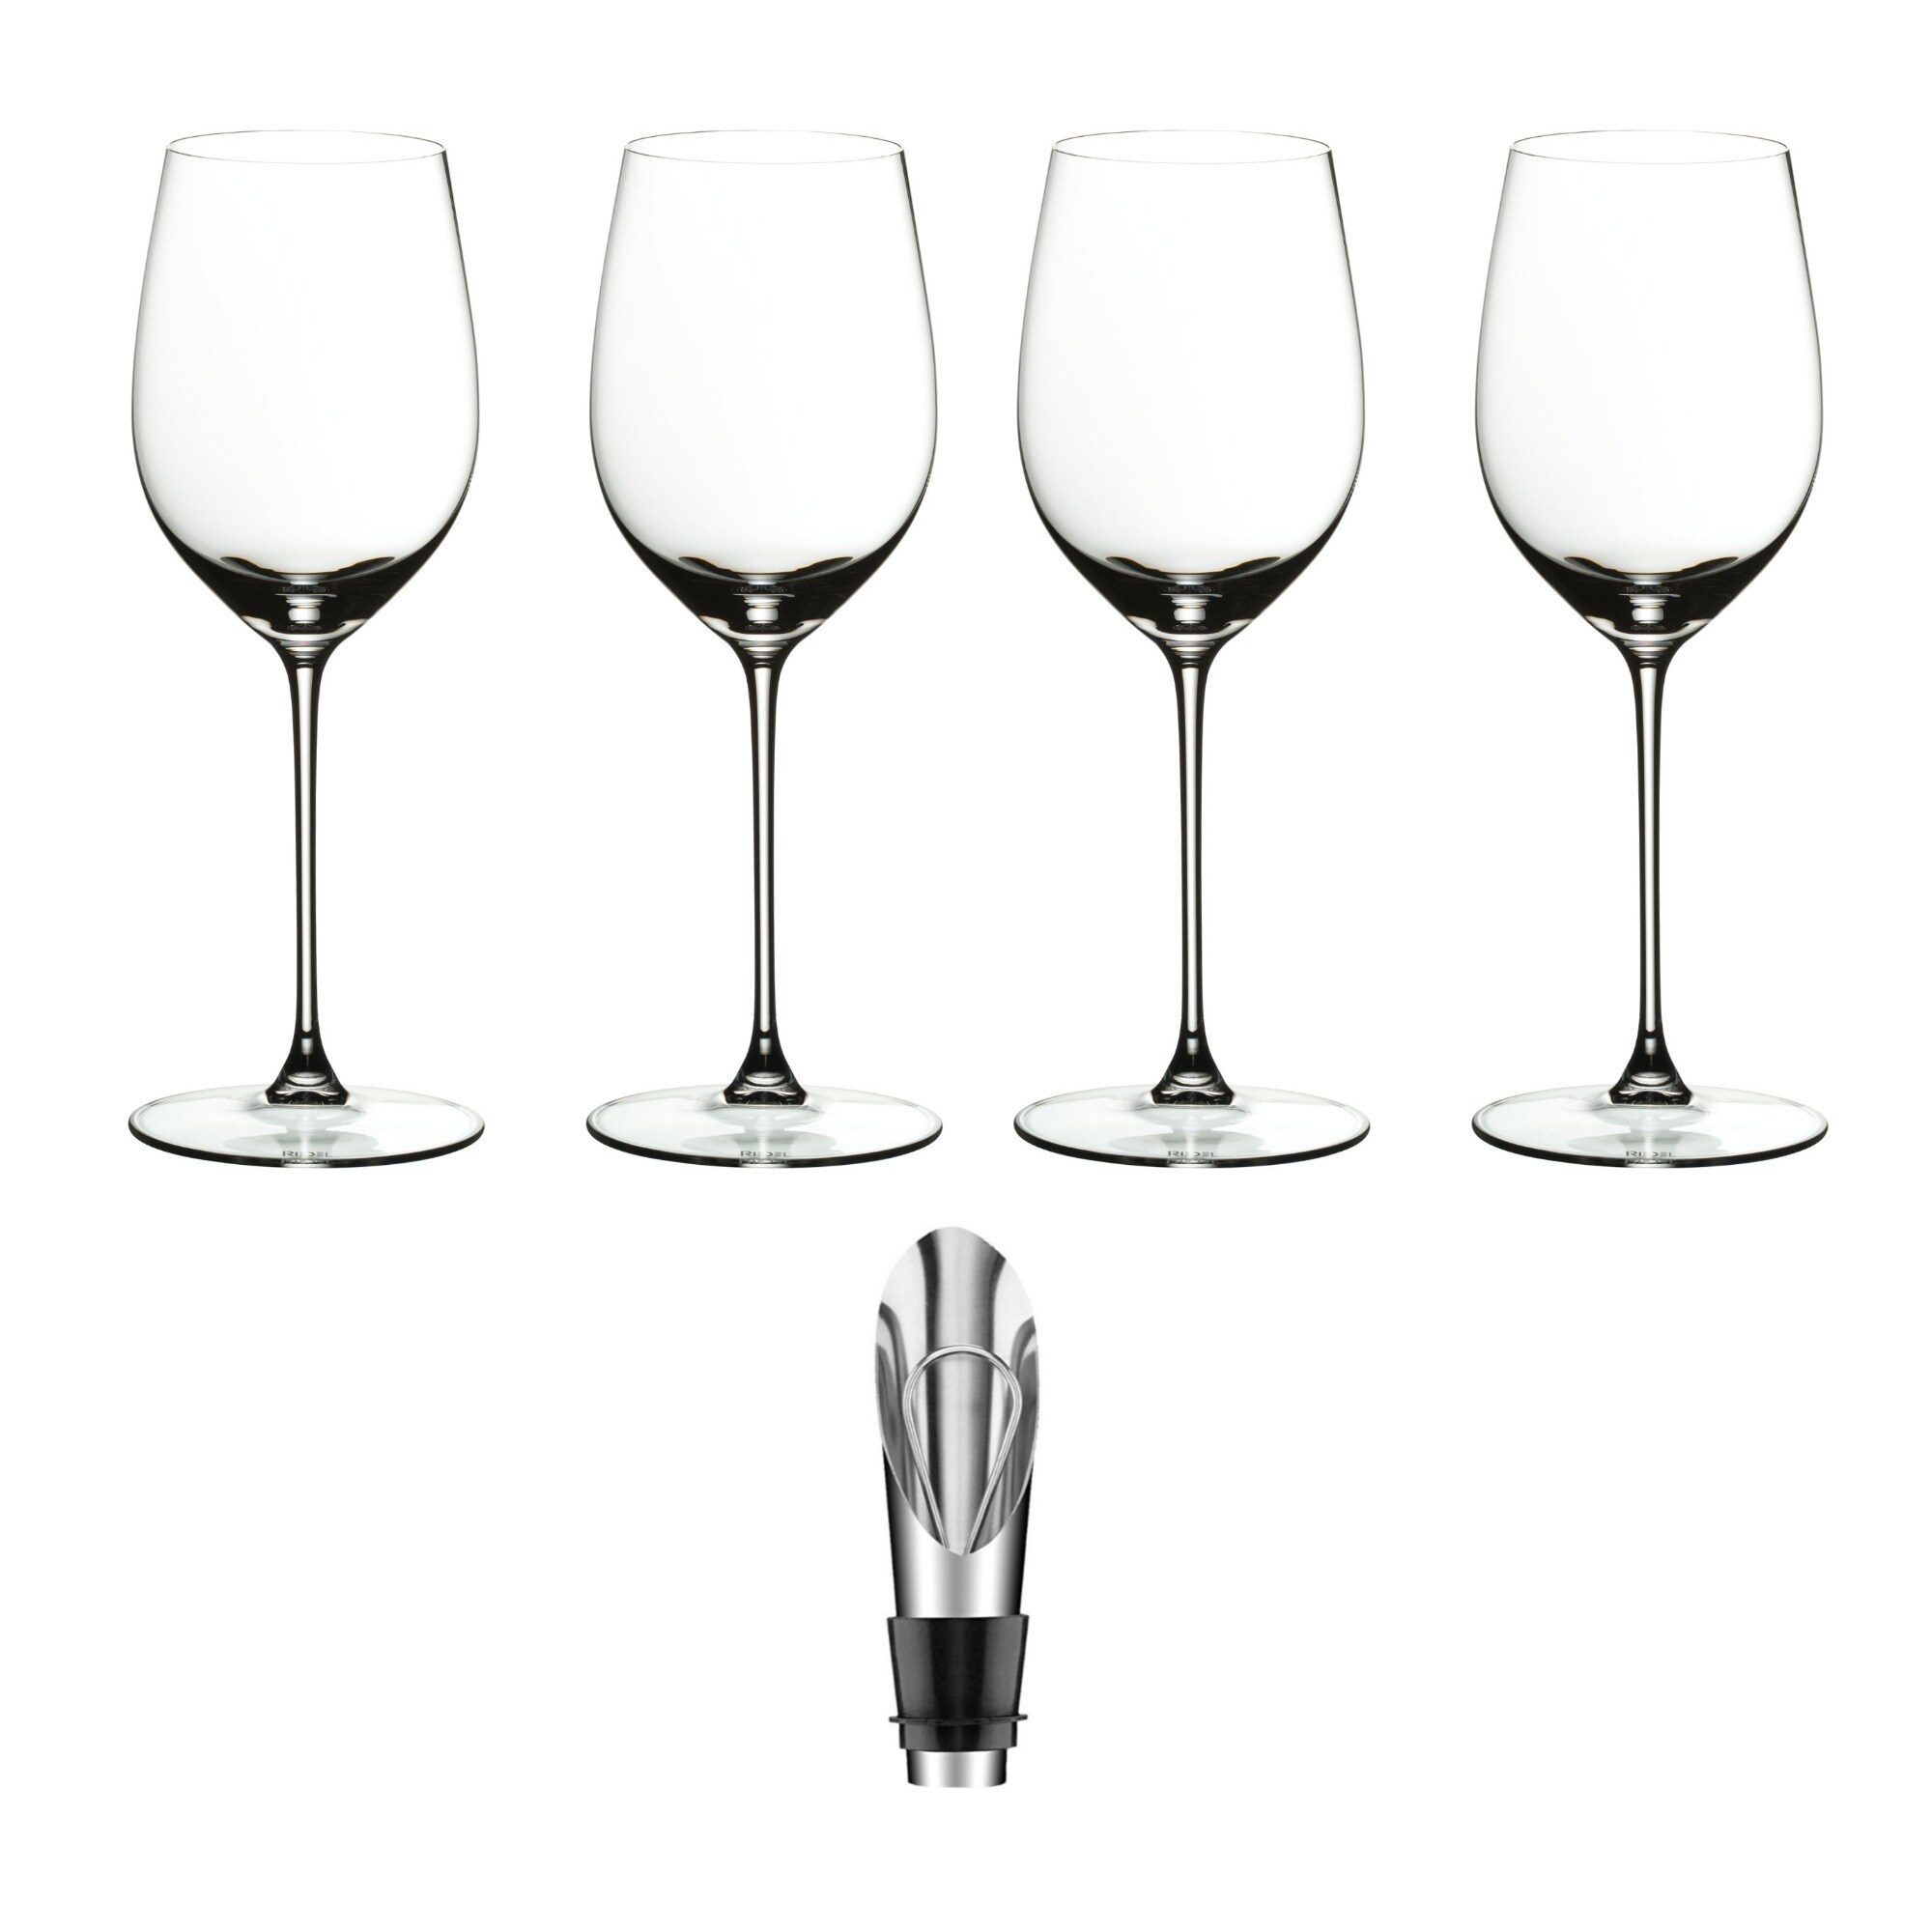 https://ak1.ostkcdn.com/images/products/is/images/direct/165fb9a7b07b433a32b6095de9c2998aaa79f768/Riedel-Veritas-Viognier-Chardonnay-Glass-%284Pk%29-%26-Cuisinart-Wine-Pourer.jpg